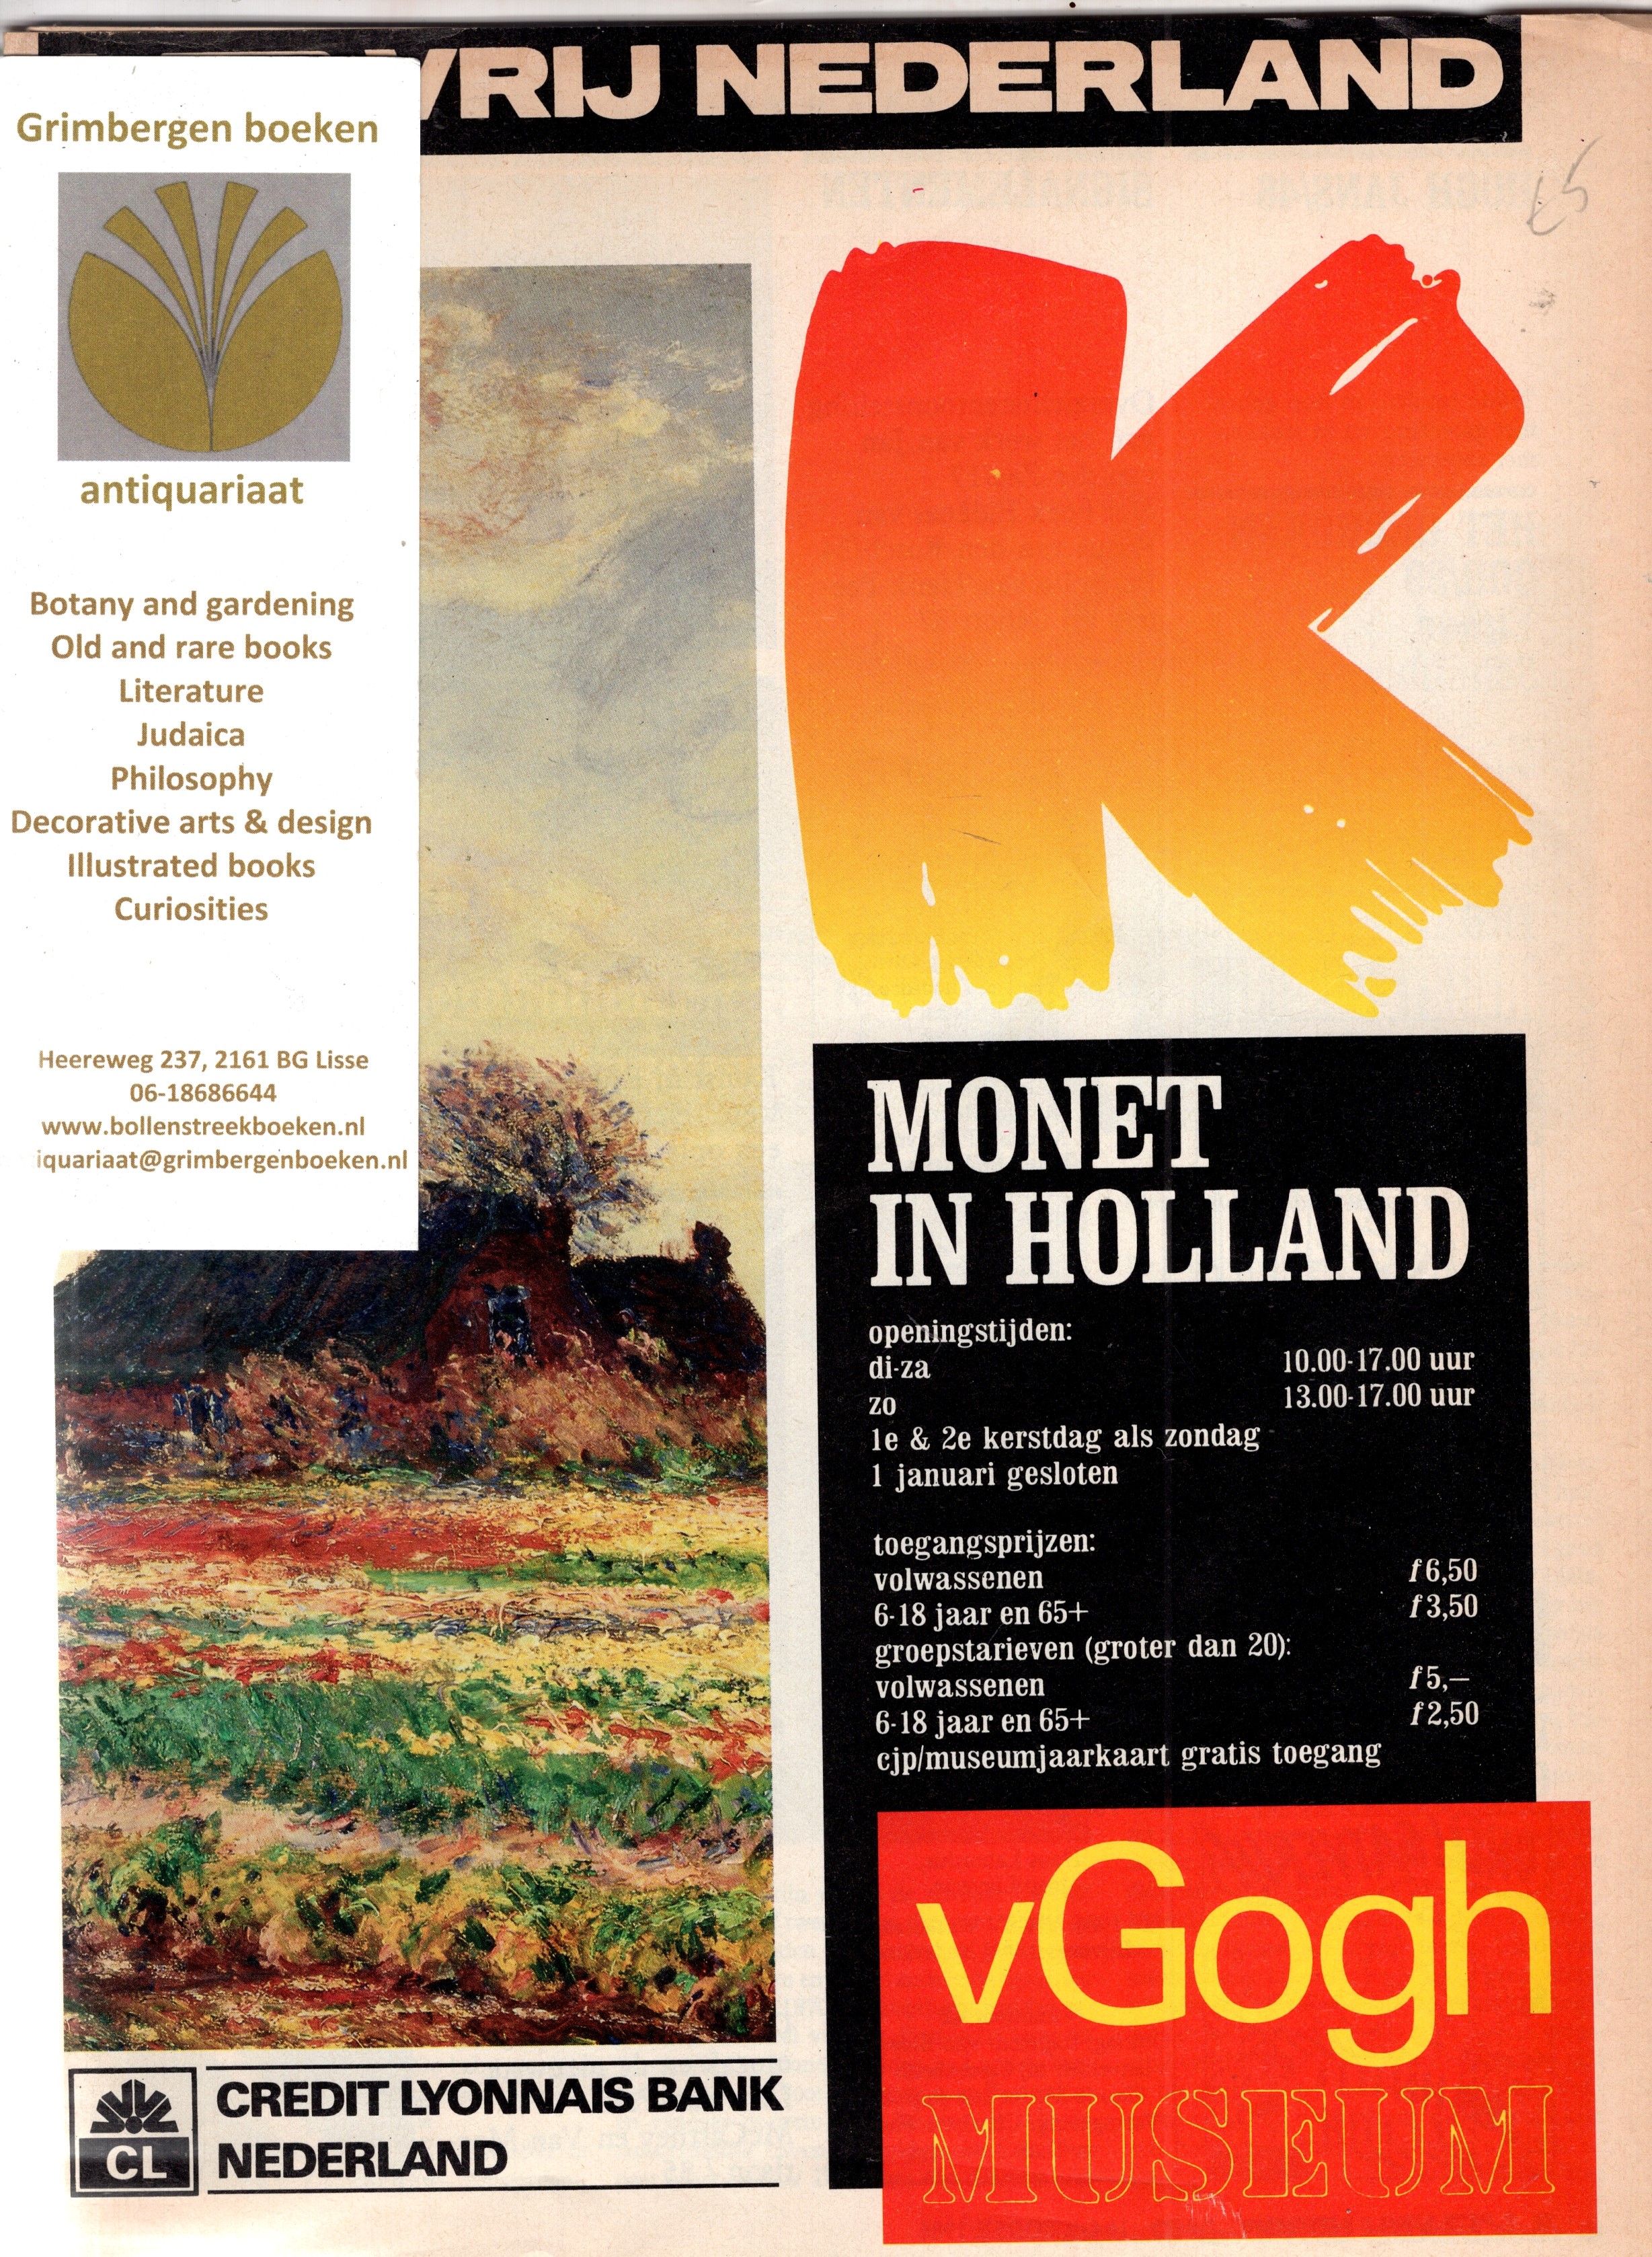 Vrij Nederland - Monet in Holland